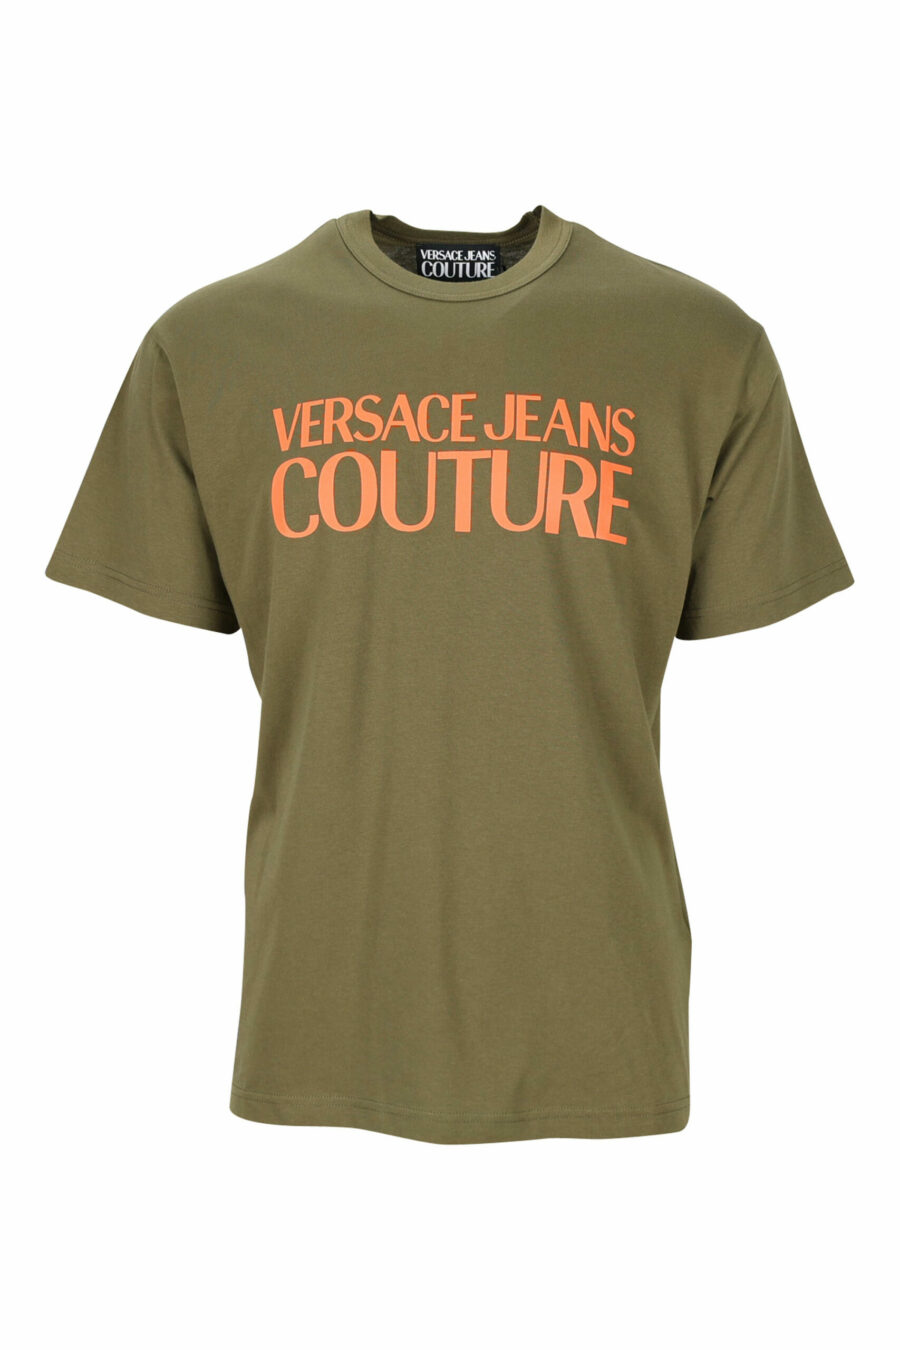 T-shirt verde militar com maxilogue laranja clássico - 8052019468090 scaled